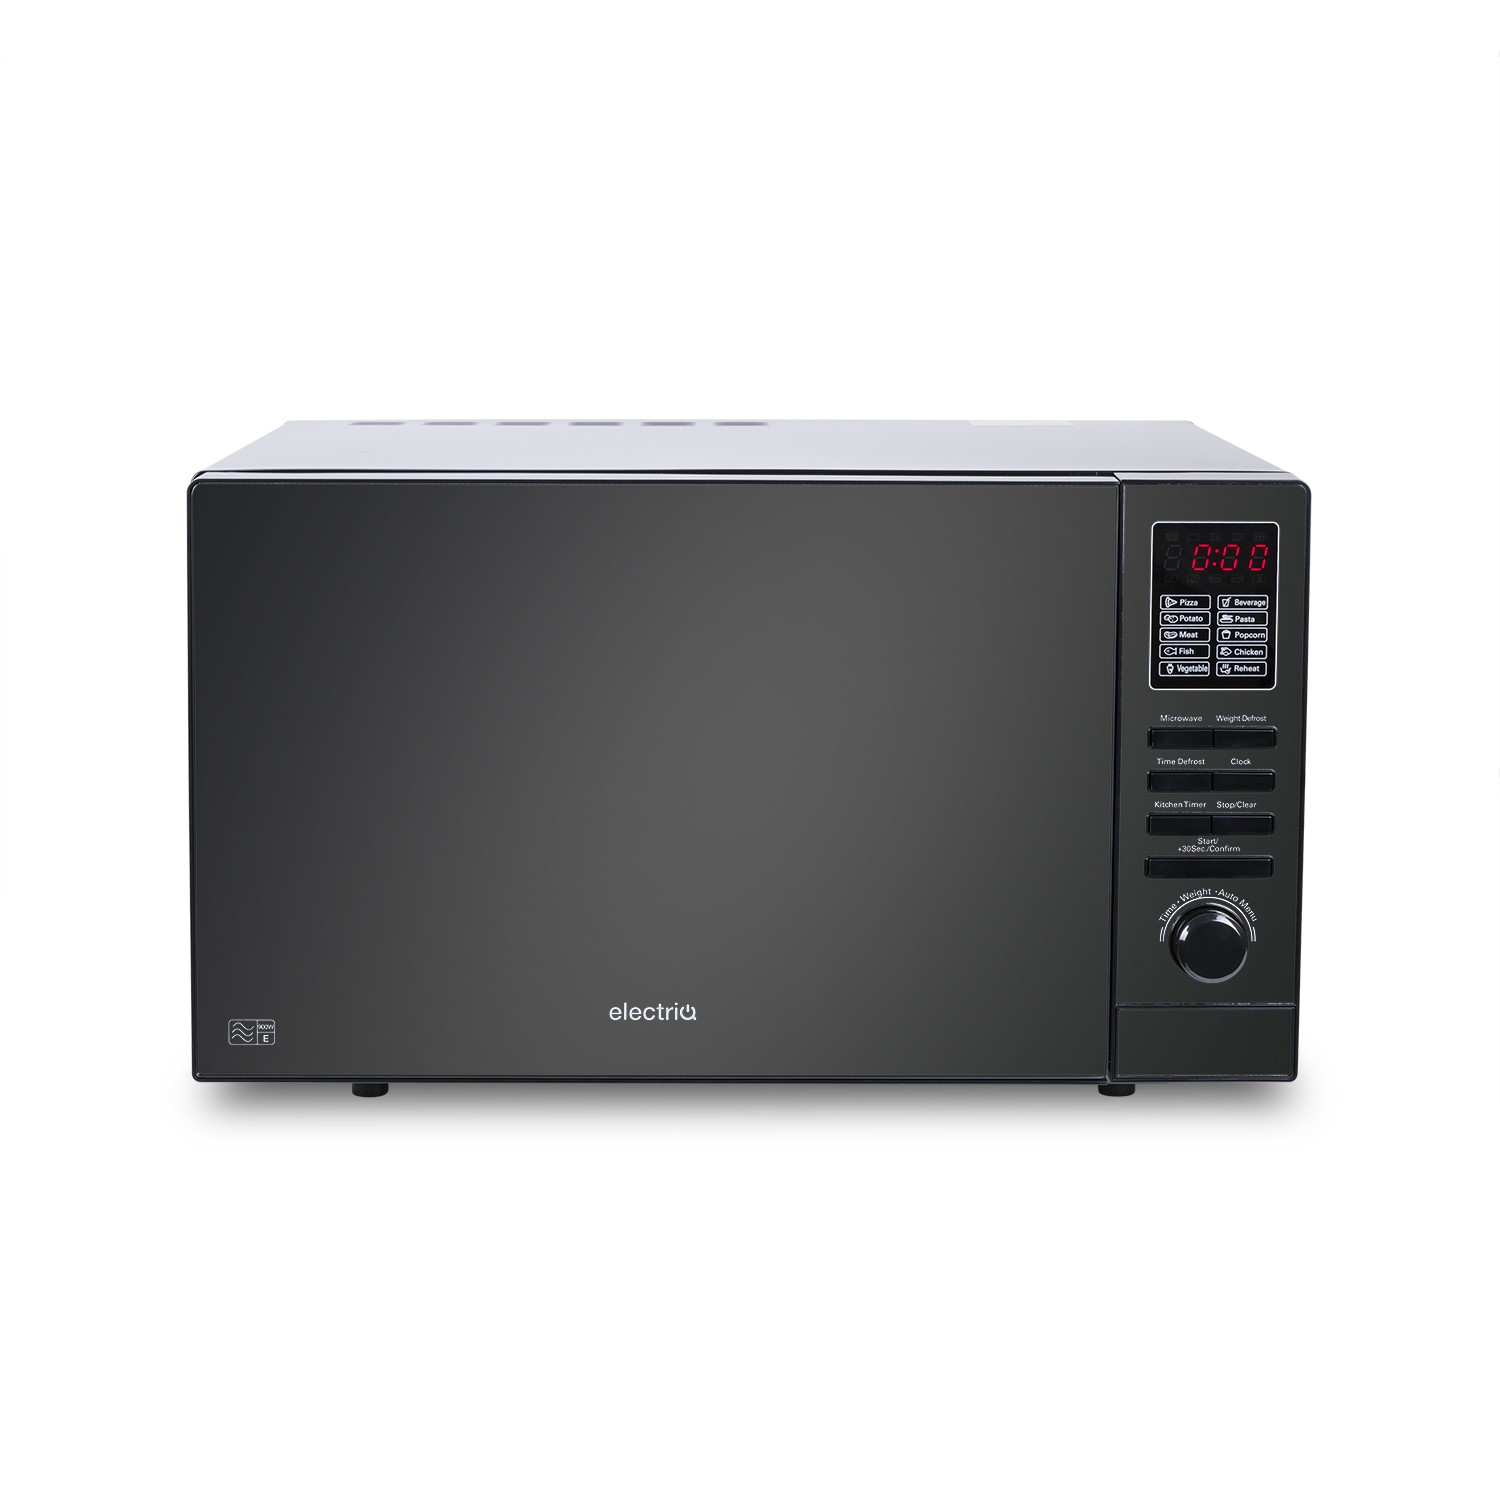 electriQ Solo Microwave - Freestanding - 900W - 25 Litre - Black